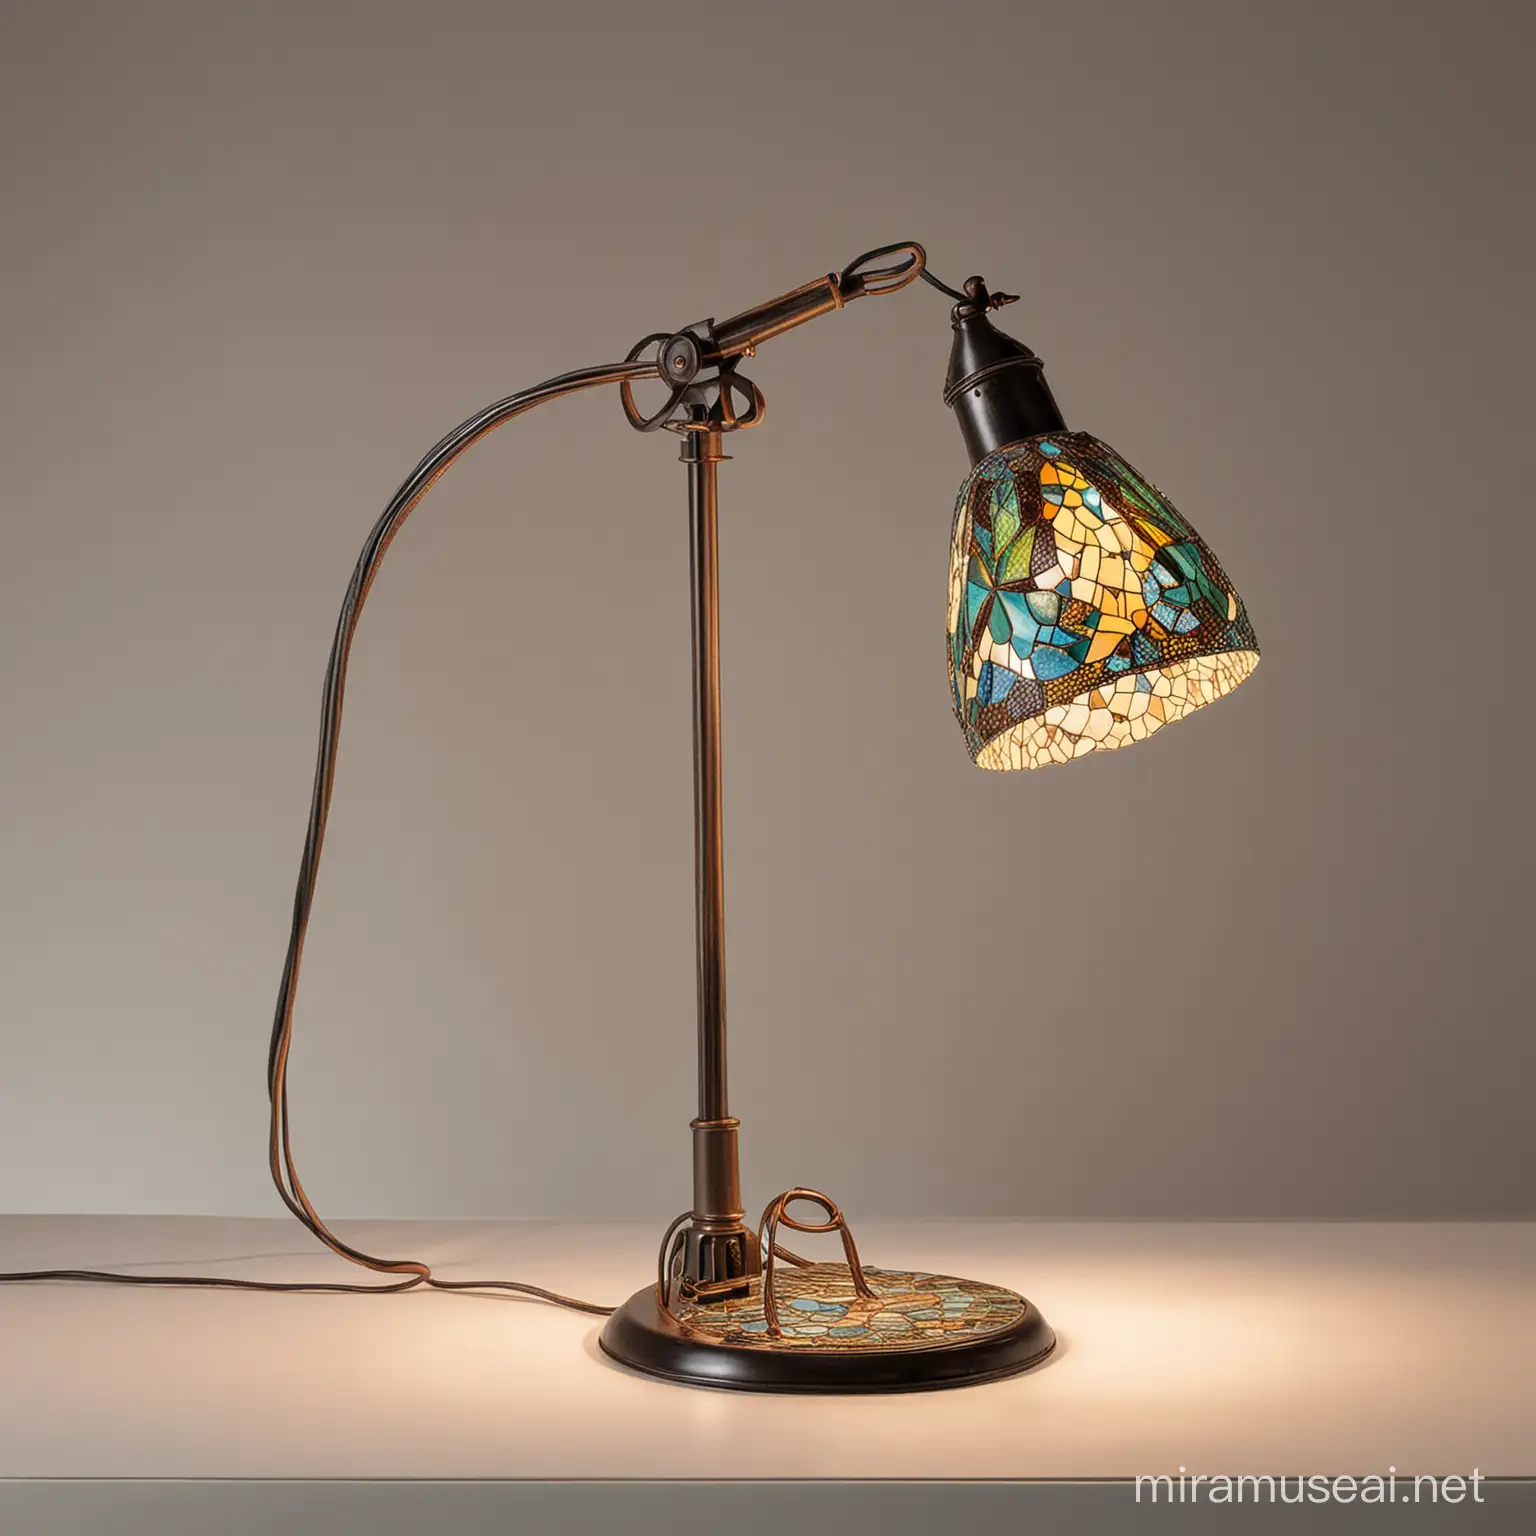 Vintage Desk Lamp Inspired by Antoni Gauds Organic Designs